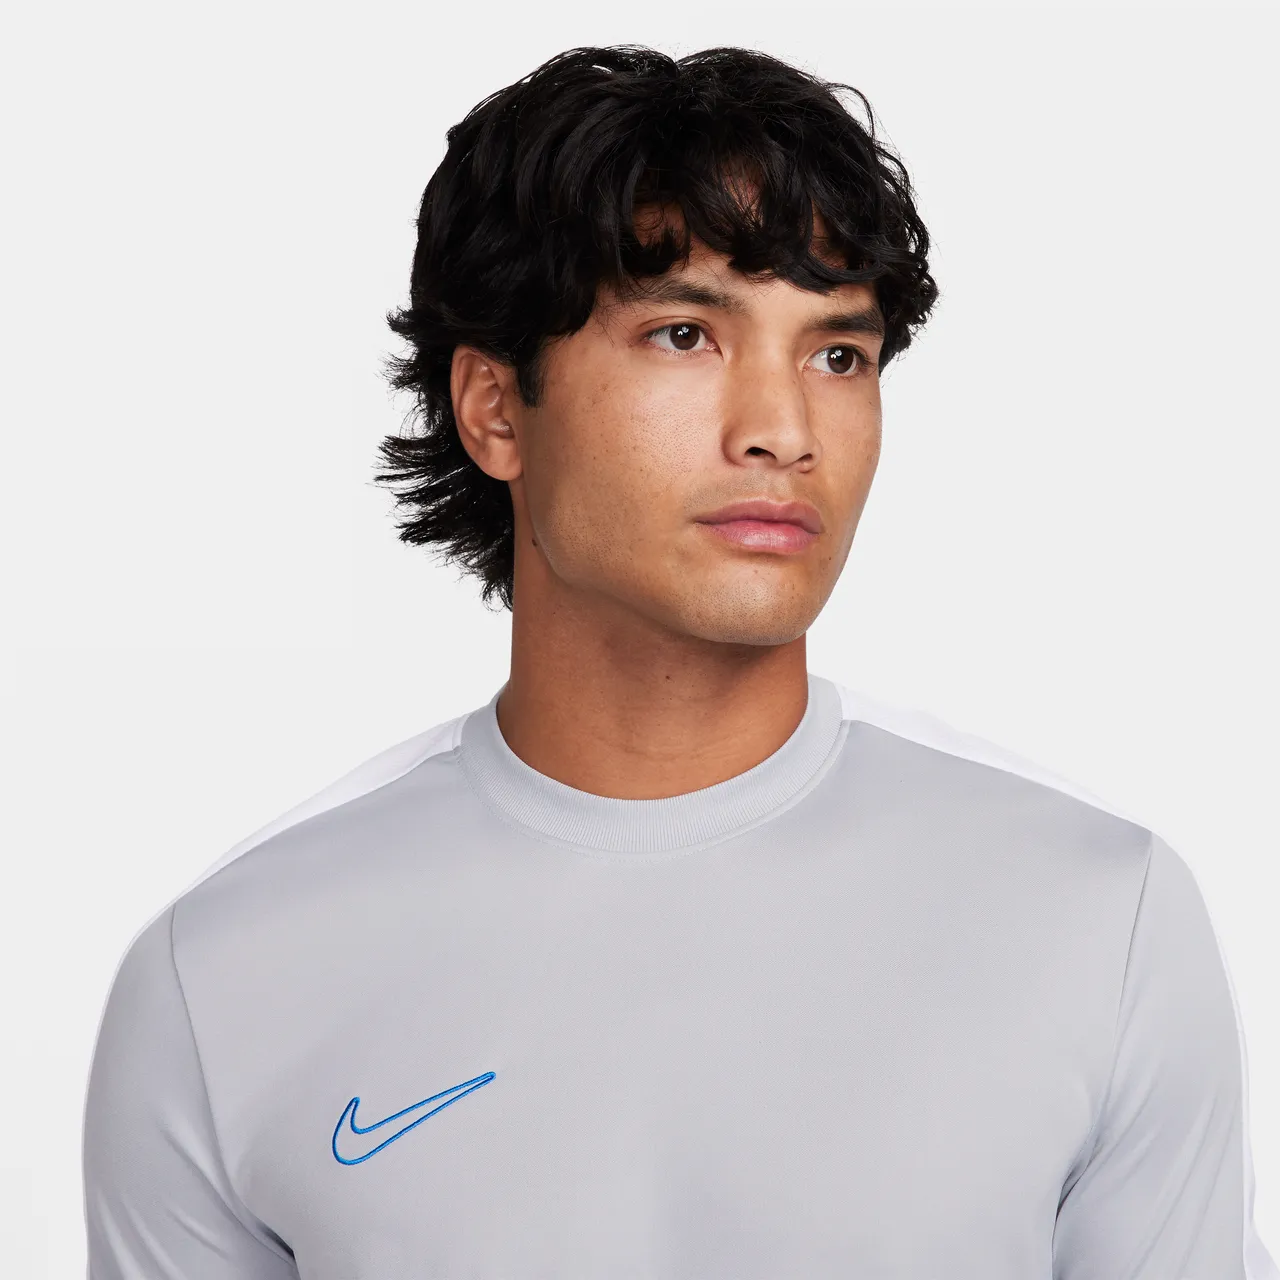 Nike Academy Men's Dri-FIT Short-Sleeve Football Top - Grey - Polyester